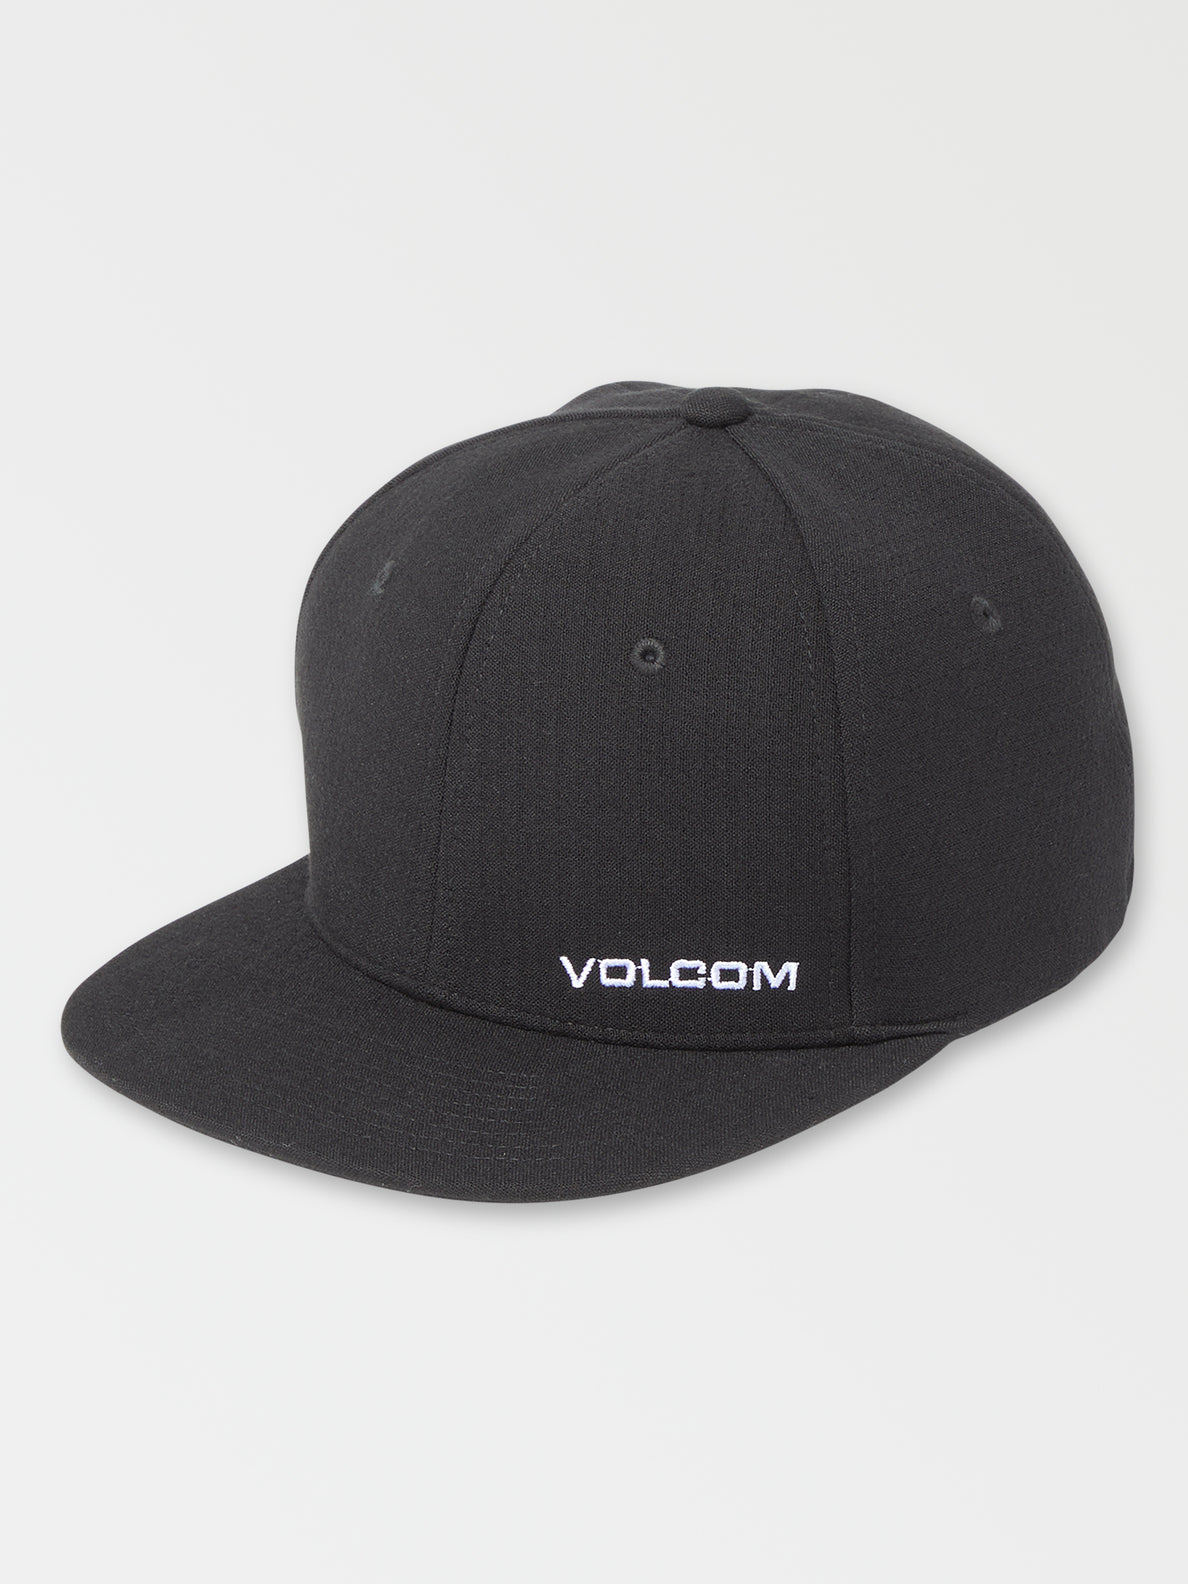 V-Euro Xfit 2 Hat - Black